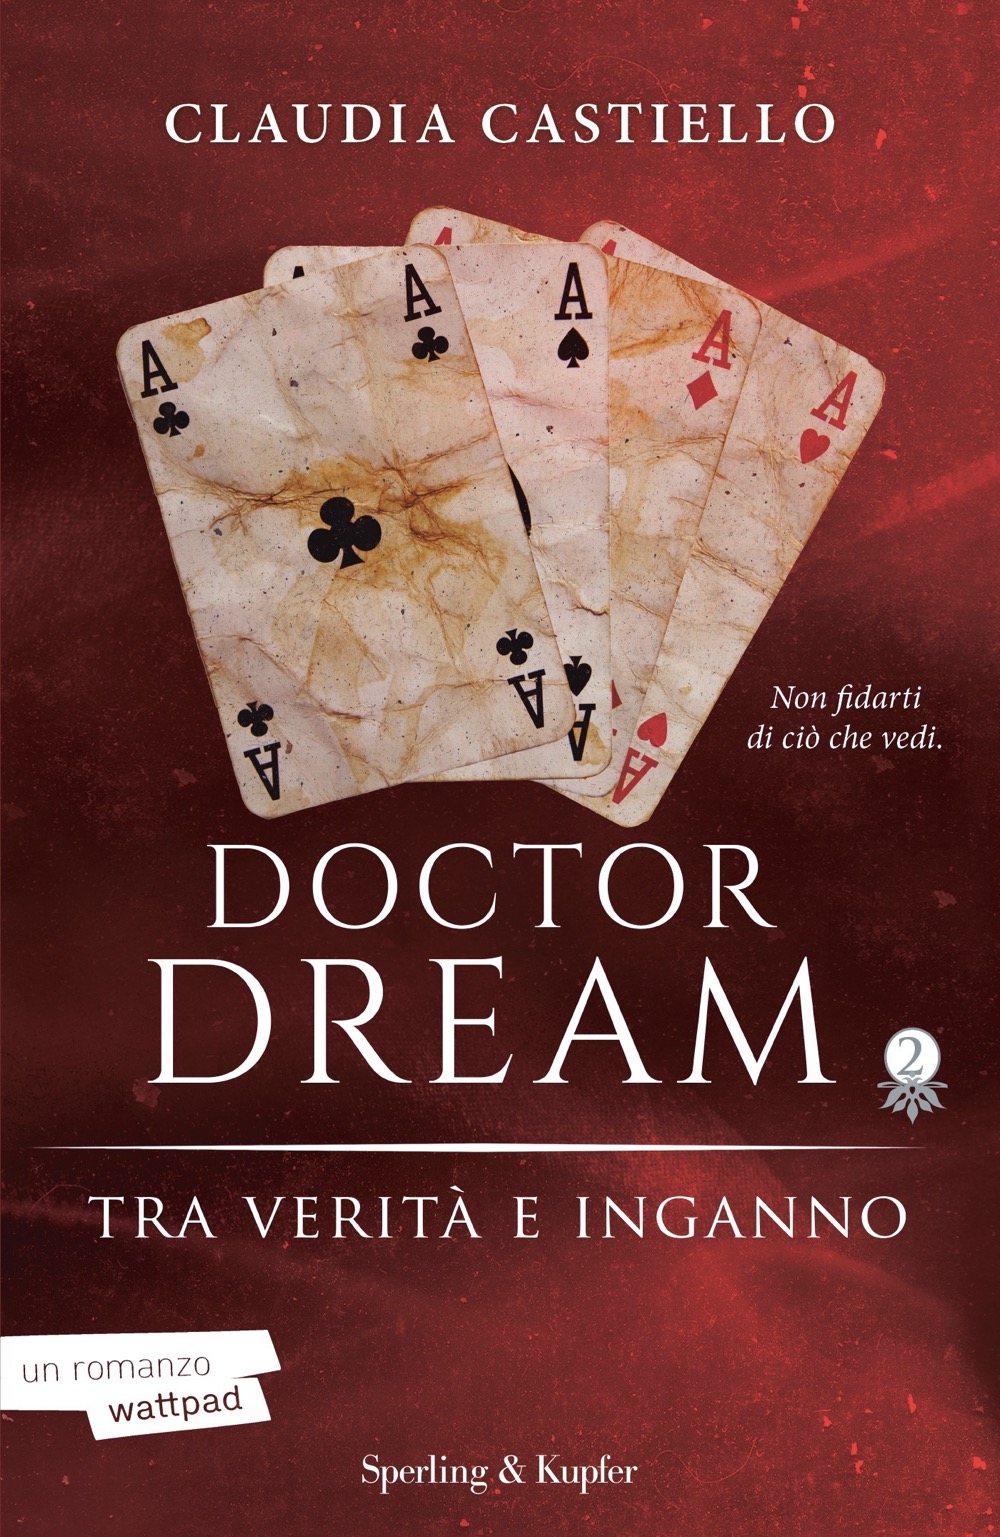 DOCTOR DREAM 2 TRA VERITA' E INGANNO - Sperling & Kupfer Editore